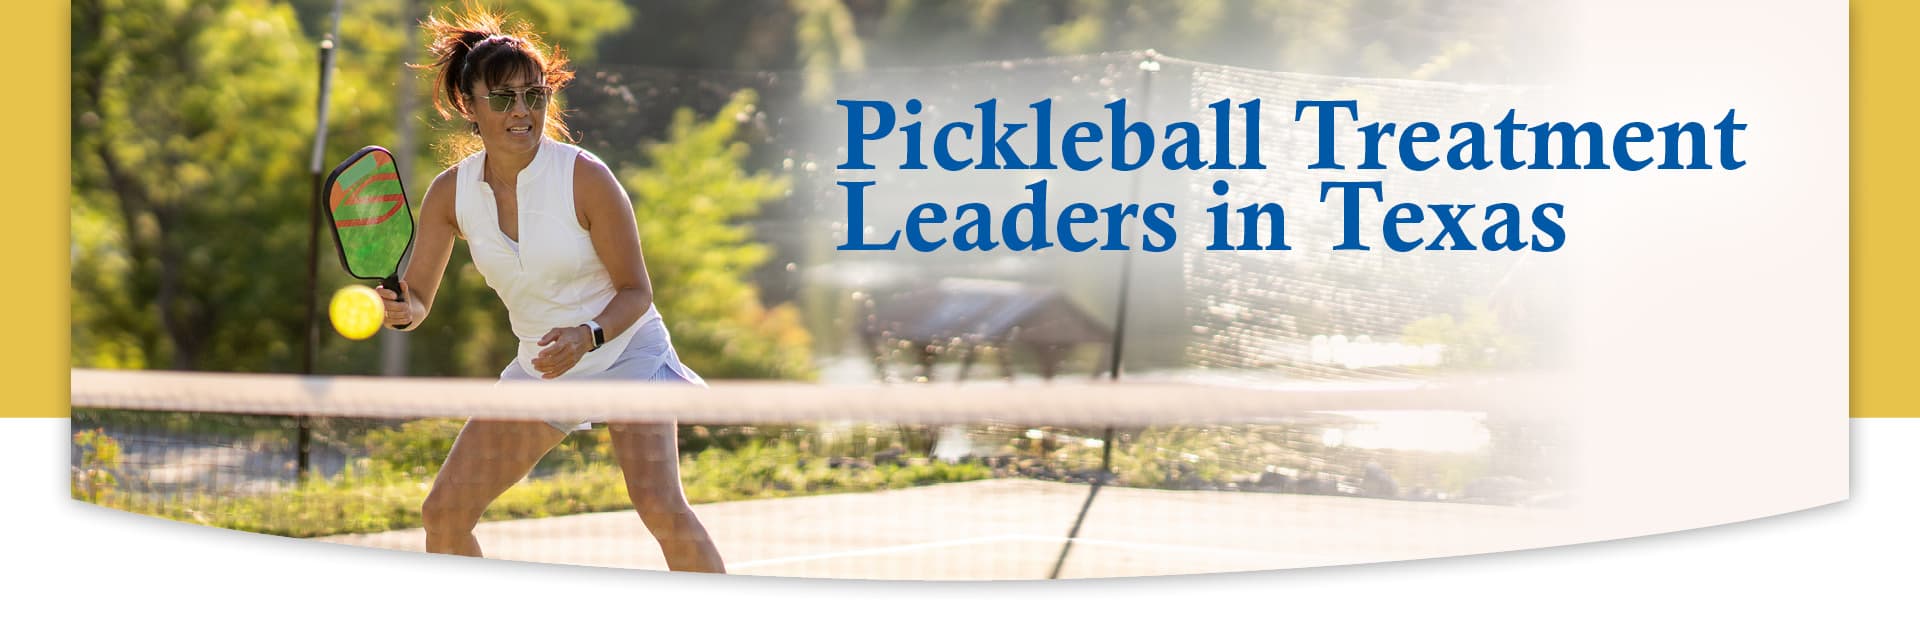 woman playing pickleball